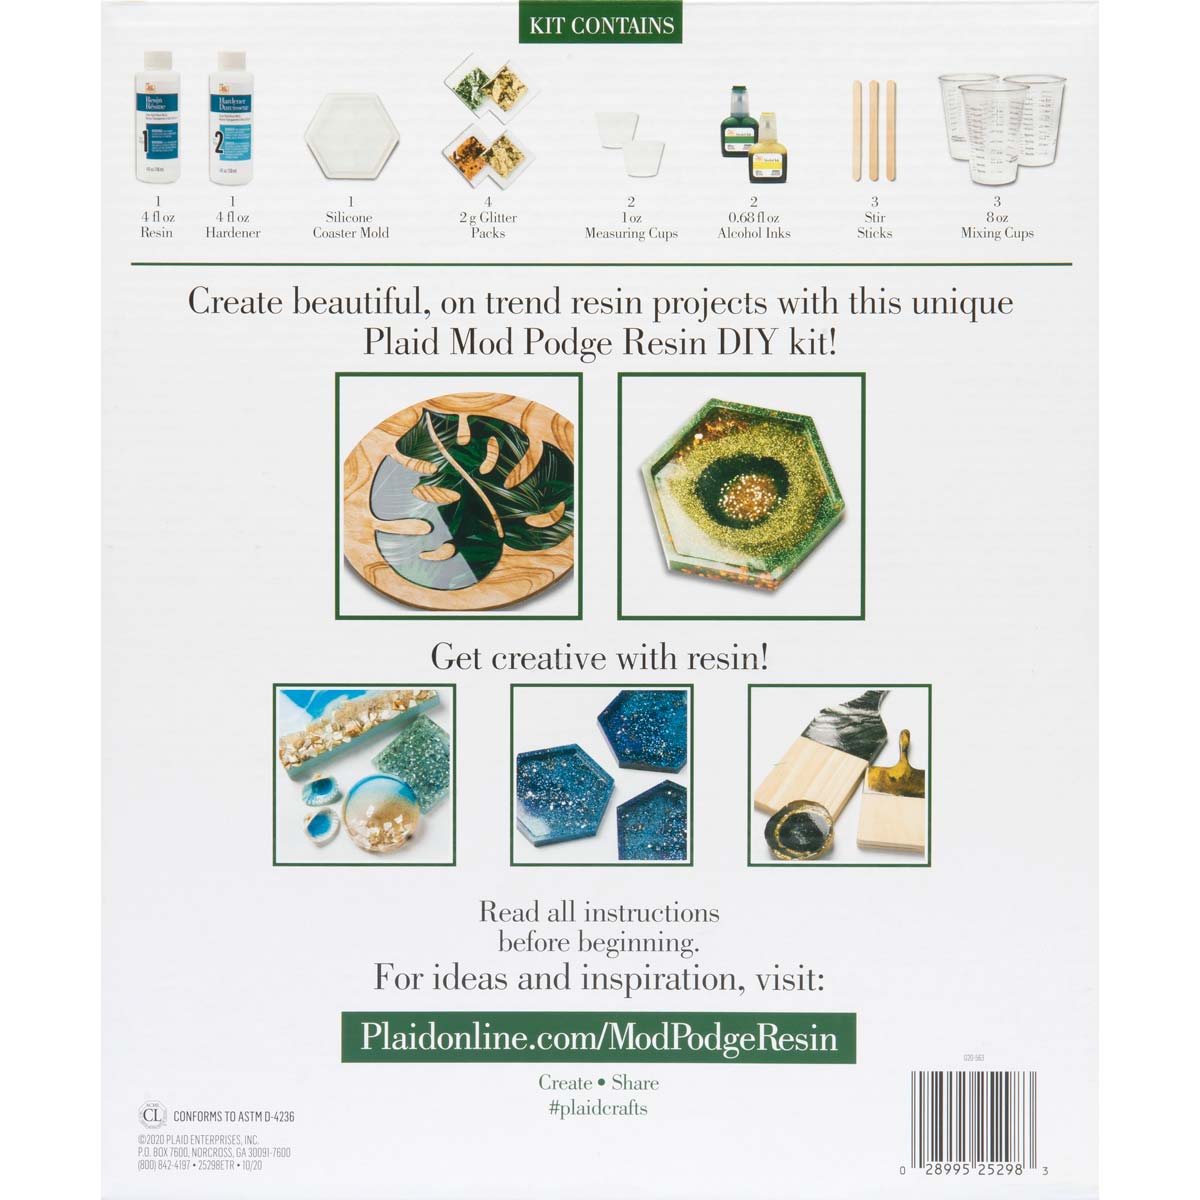 Mod Podge ® Do-It-Yourself Resin Kit - Tropical Leaf - 25298E